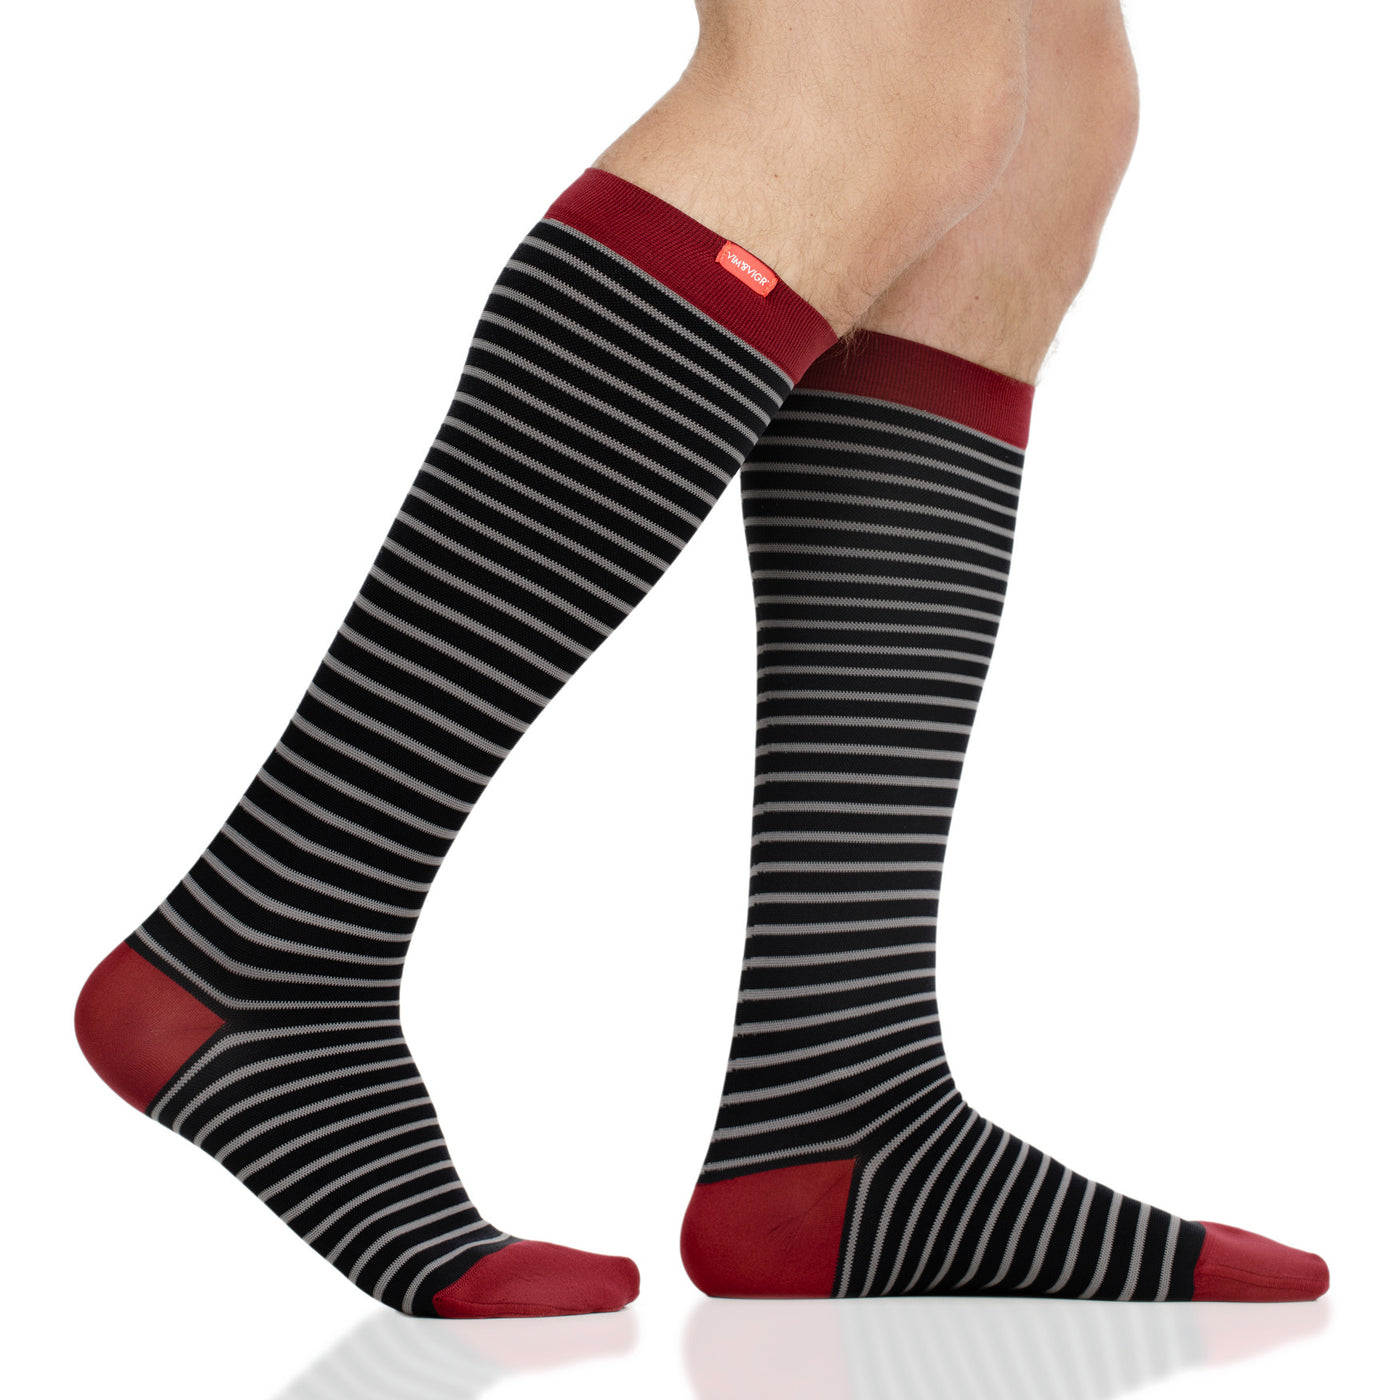 30-40 mmHg: Little Stripe Black & Grey square (Nylon) Compression Socks